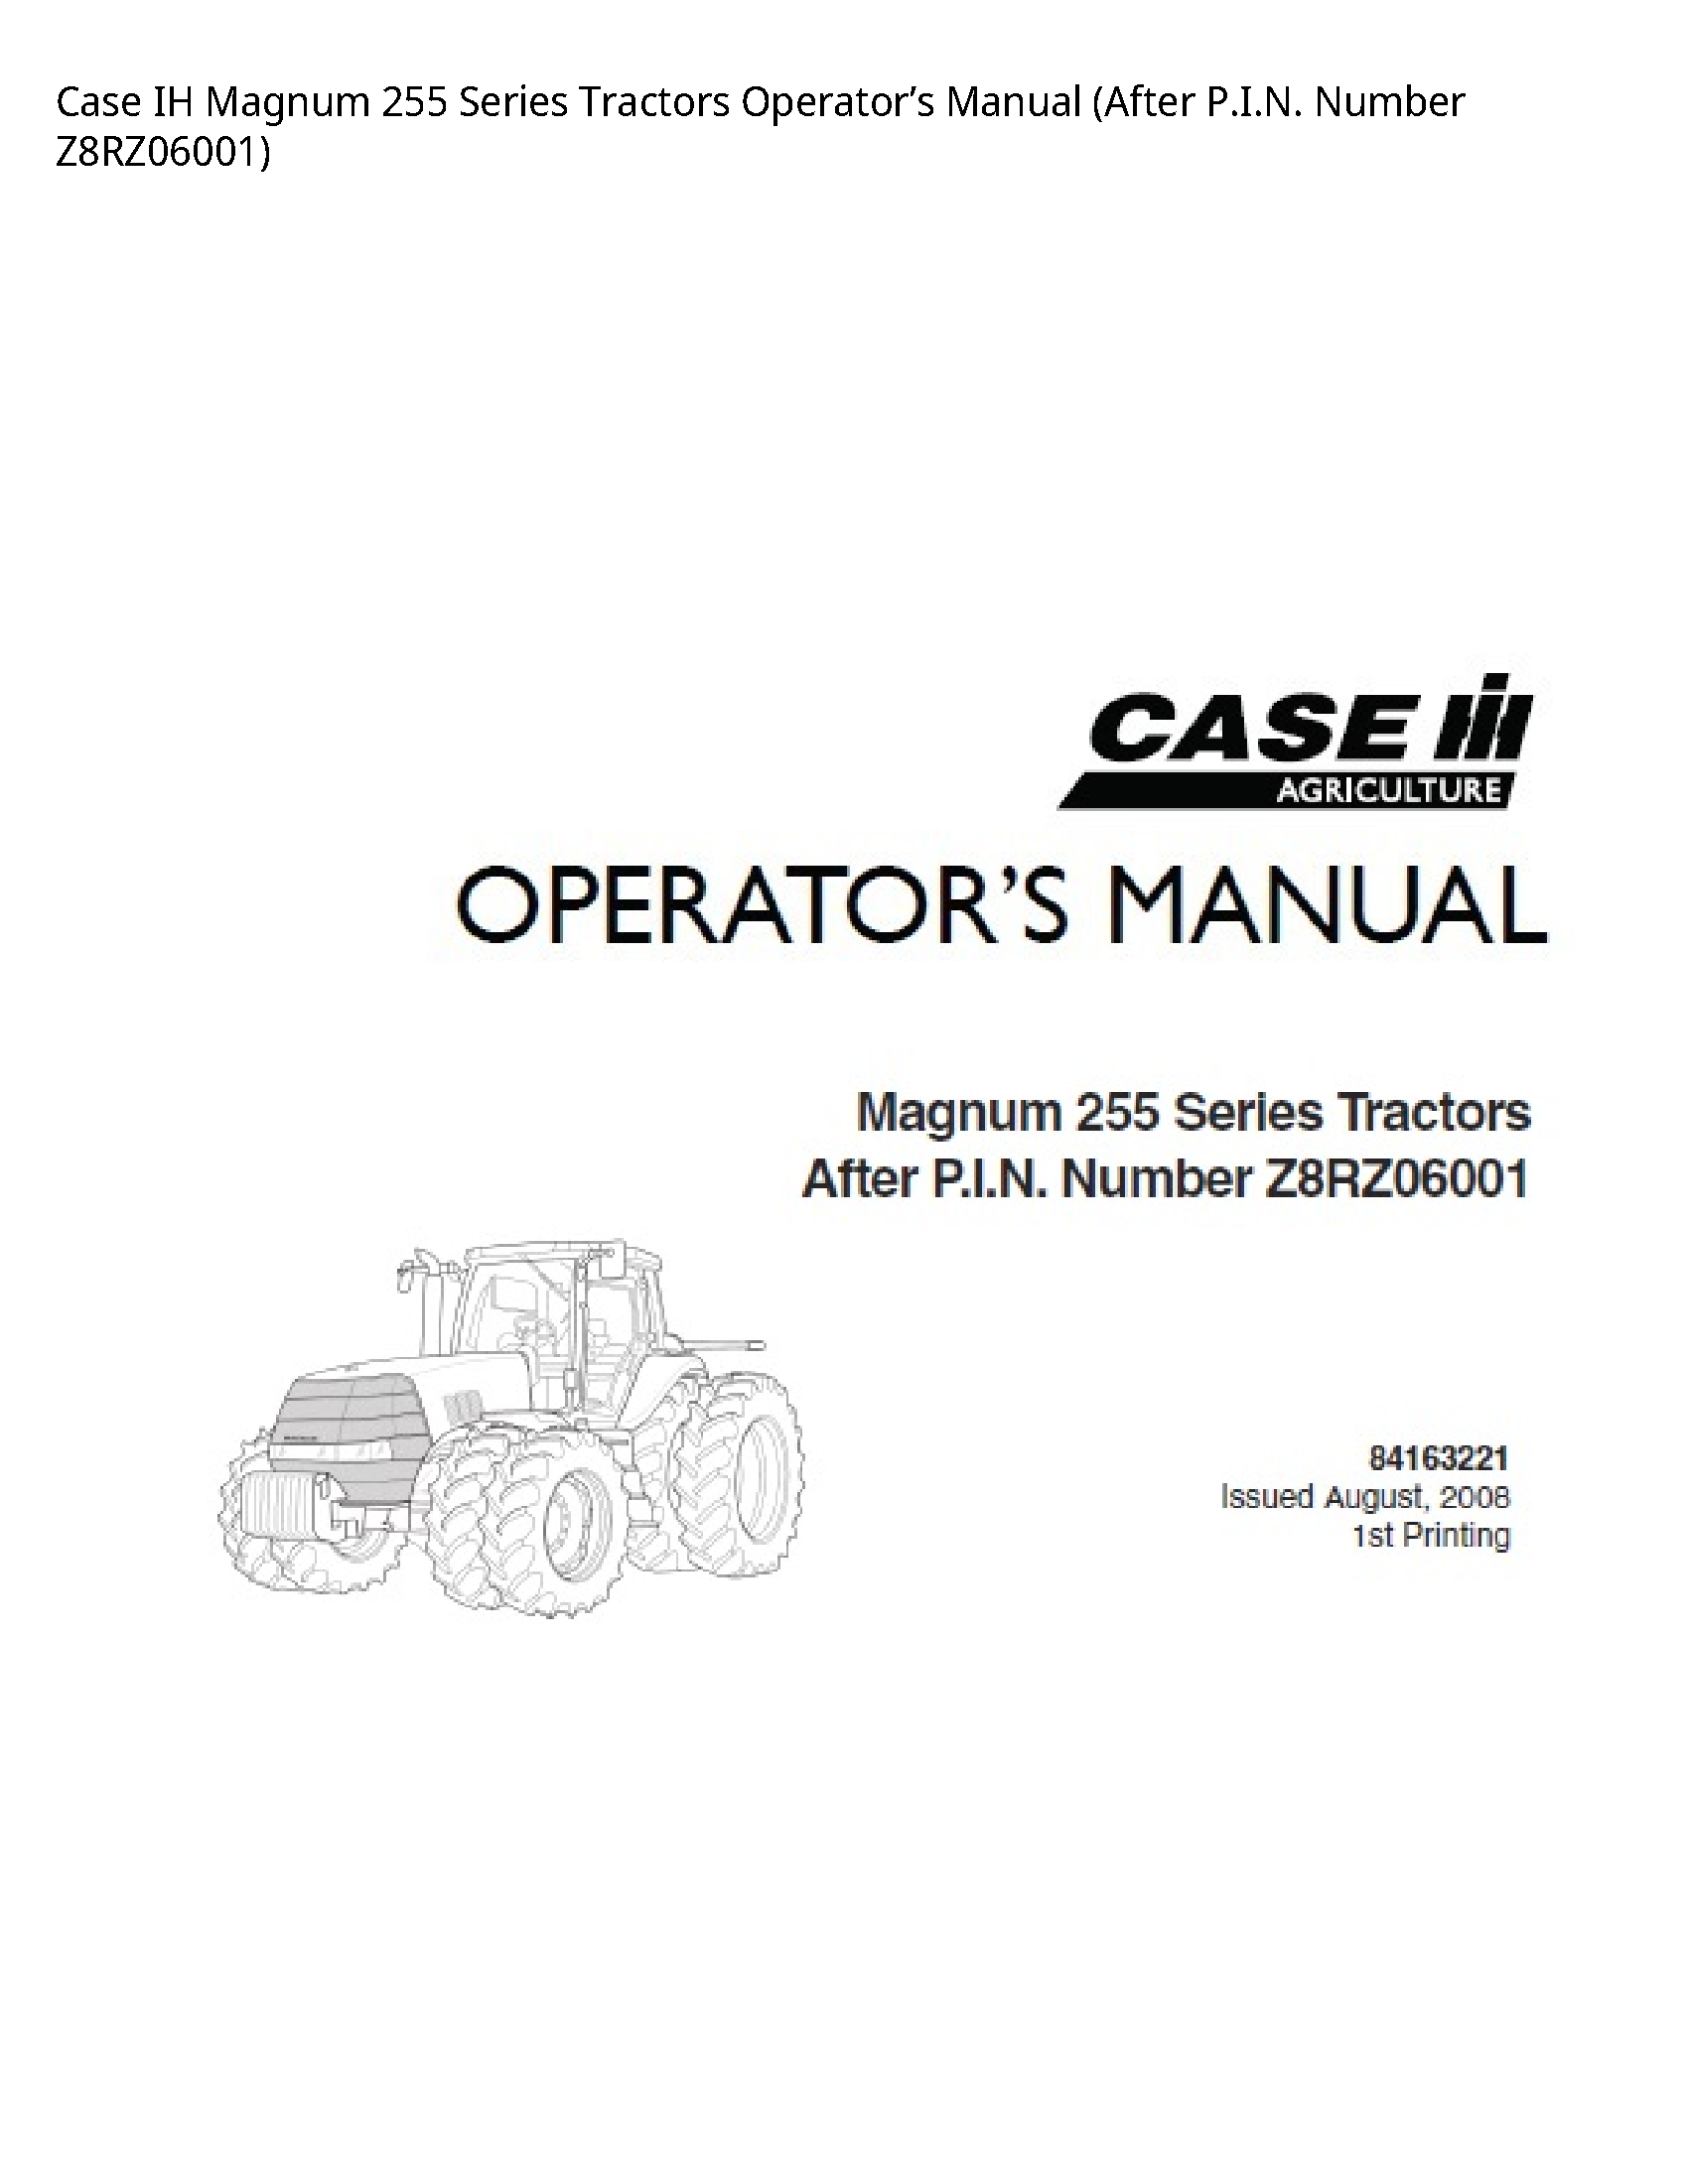 Case/Case IH 255 IH Magnum Series Tractors Operator’s manual